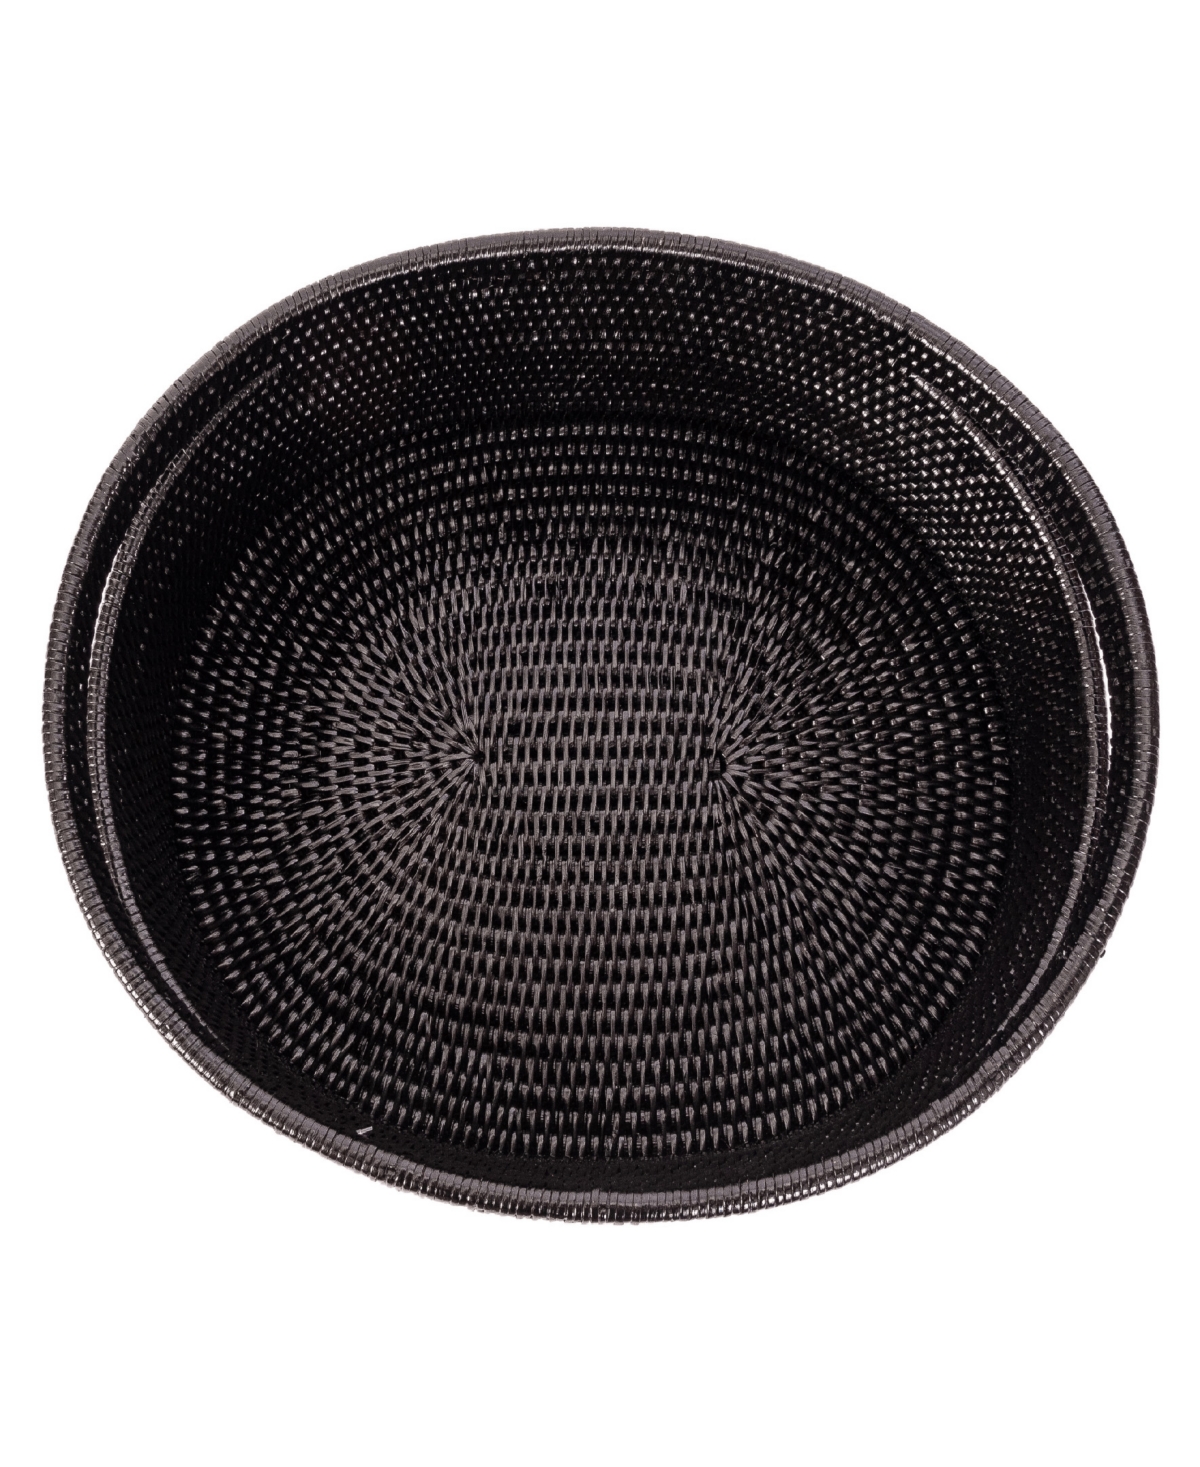 Artifacts Rattan Oval Basket - Tudor Black